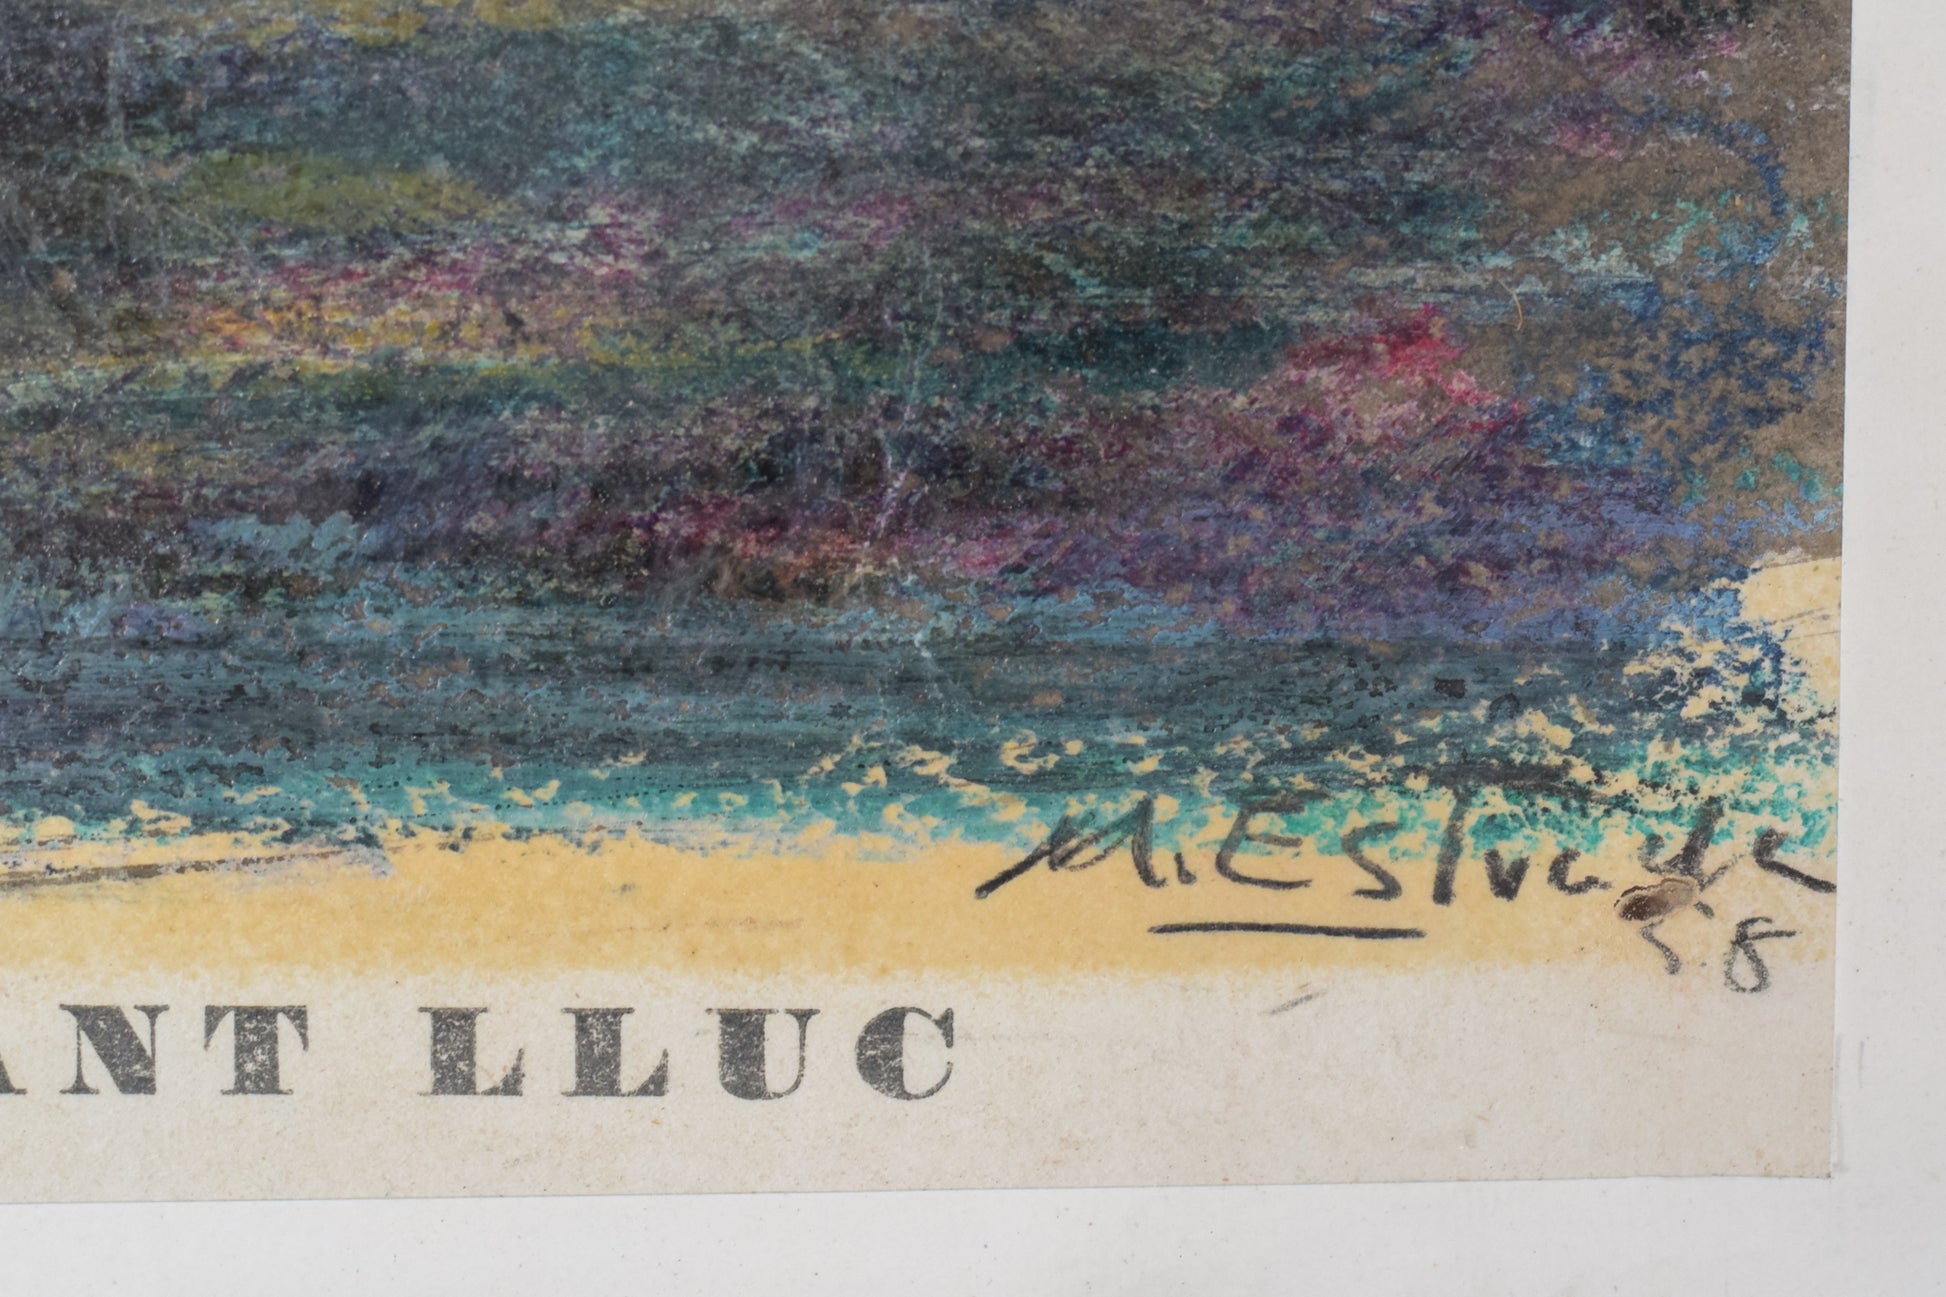 'El Círculo Artístico de Sant Lluc' Expressive Harbour Scene Lithograph_Signature